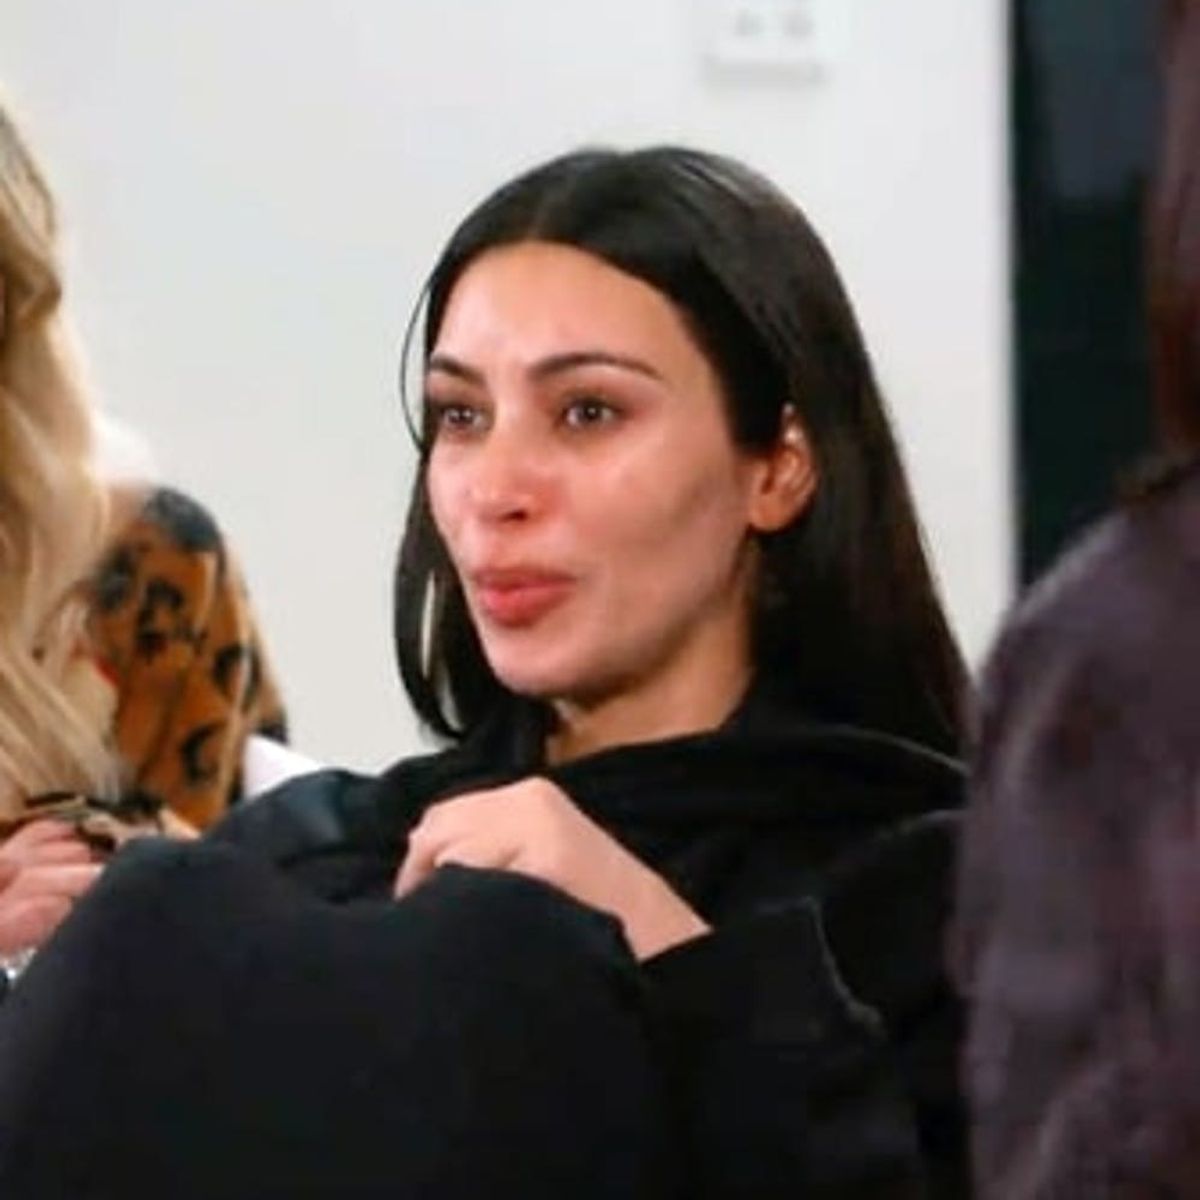 Kim Kardashian Has Broken Her Silence on the Paris Robbery